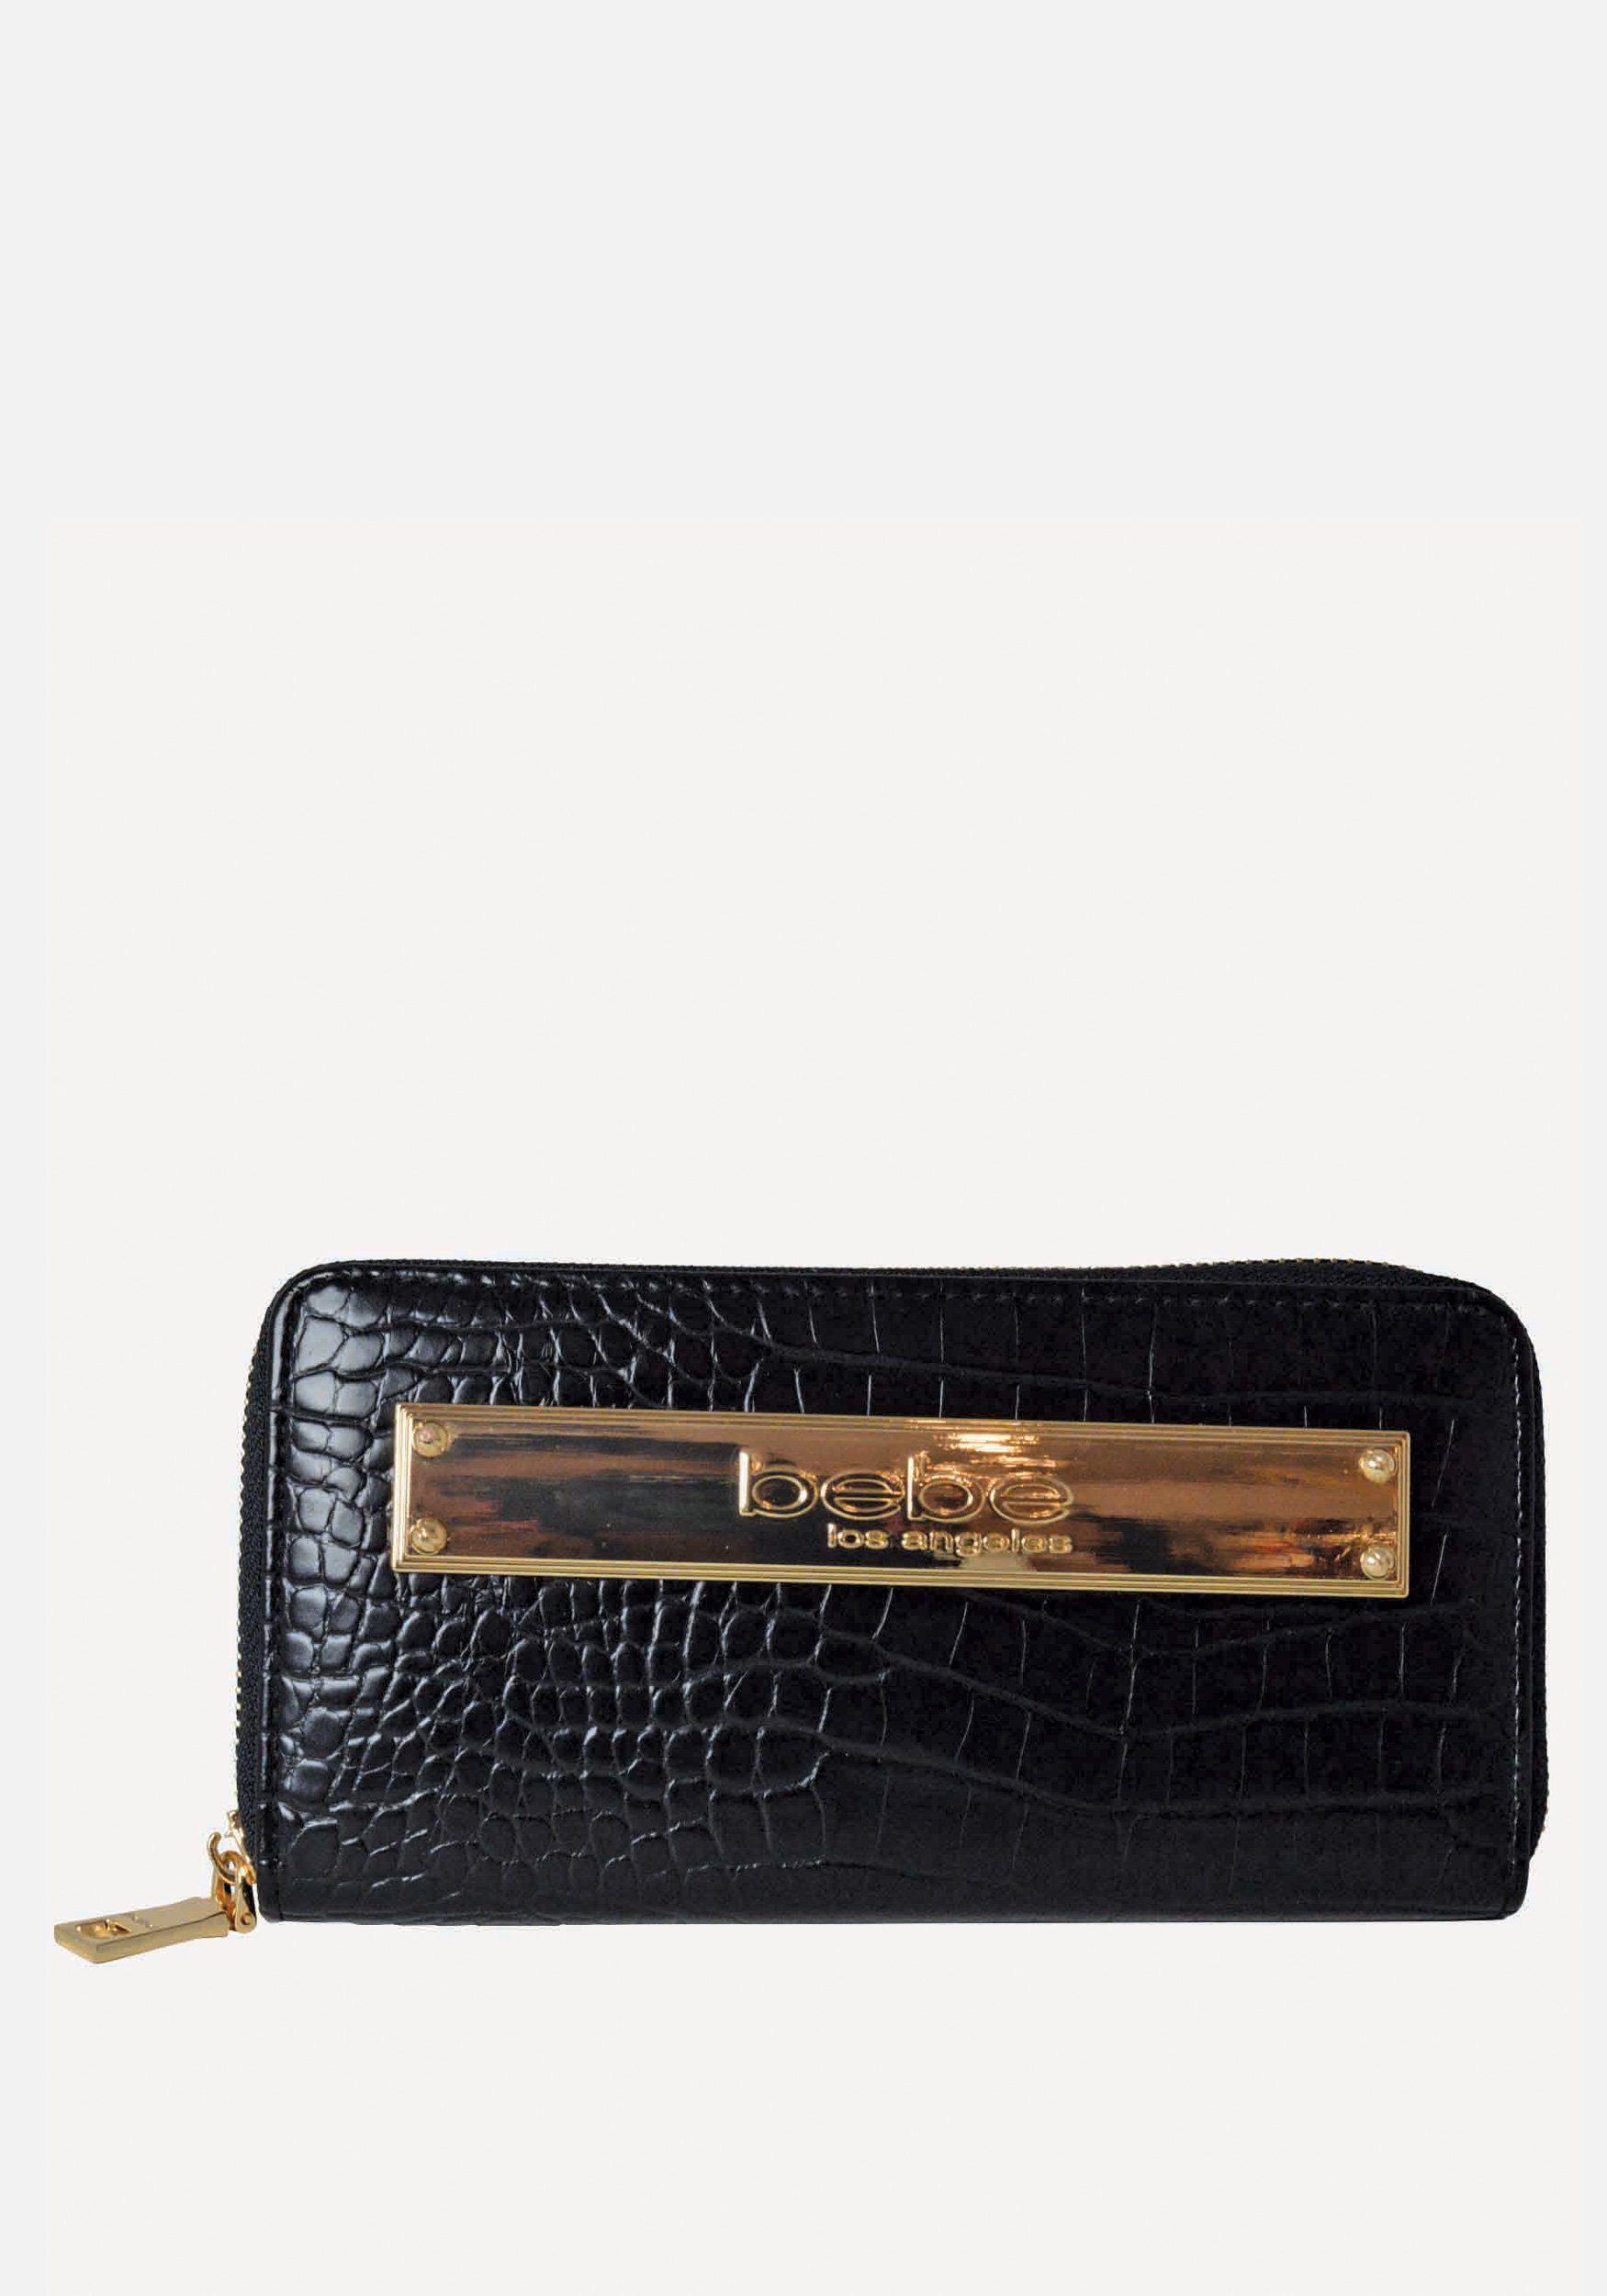 Bebe Women's Abigail Croco Continental Wallet in Black Polyester